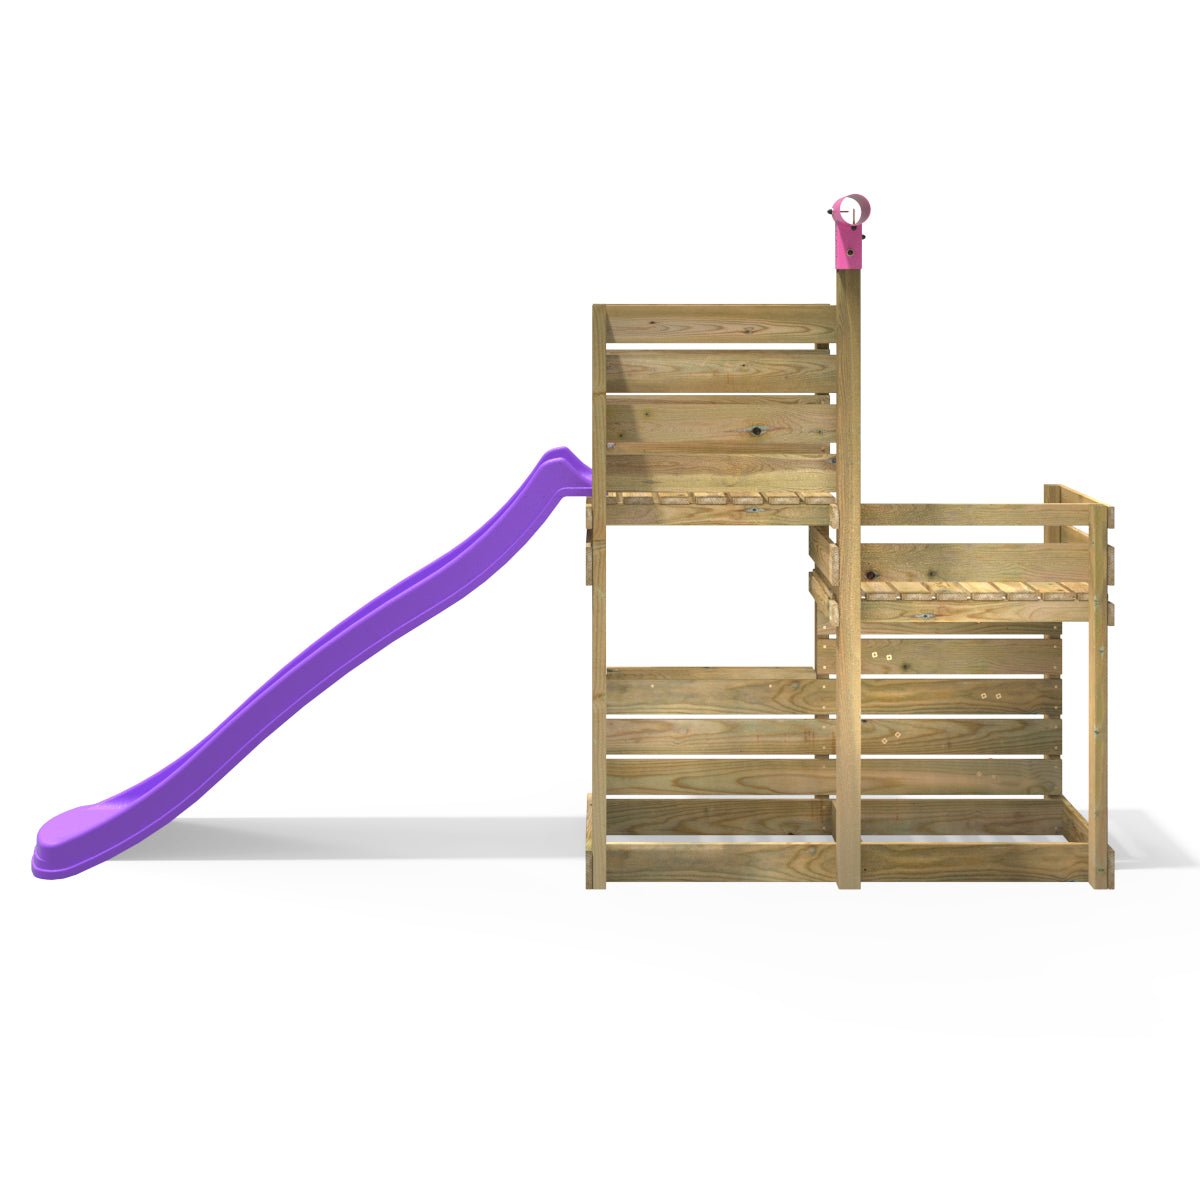 Rebo Deluxe Add On Activity Platform & 8FT Slide for Wooden Swing Sets - Purple